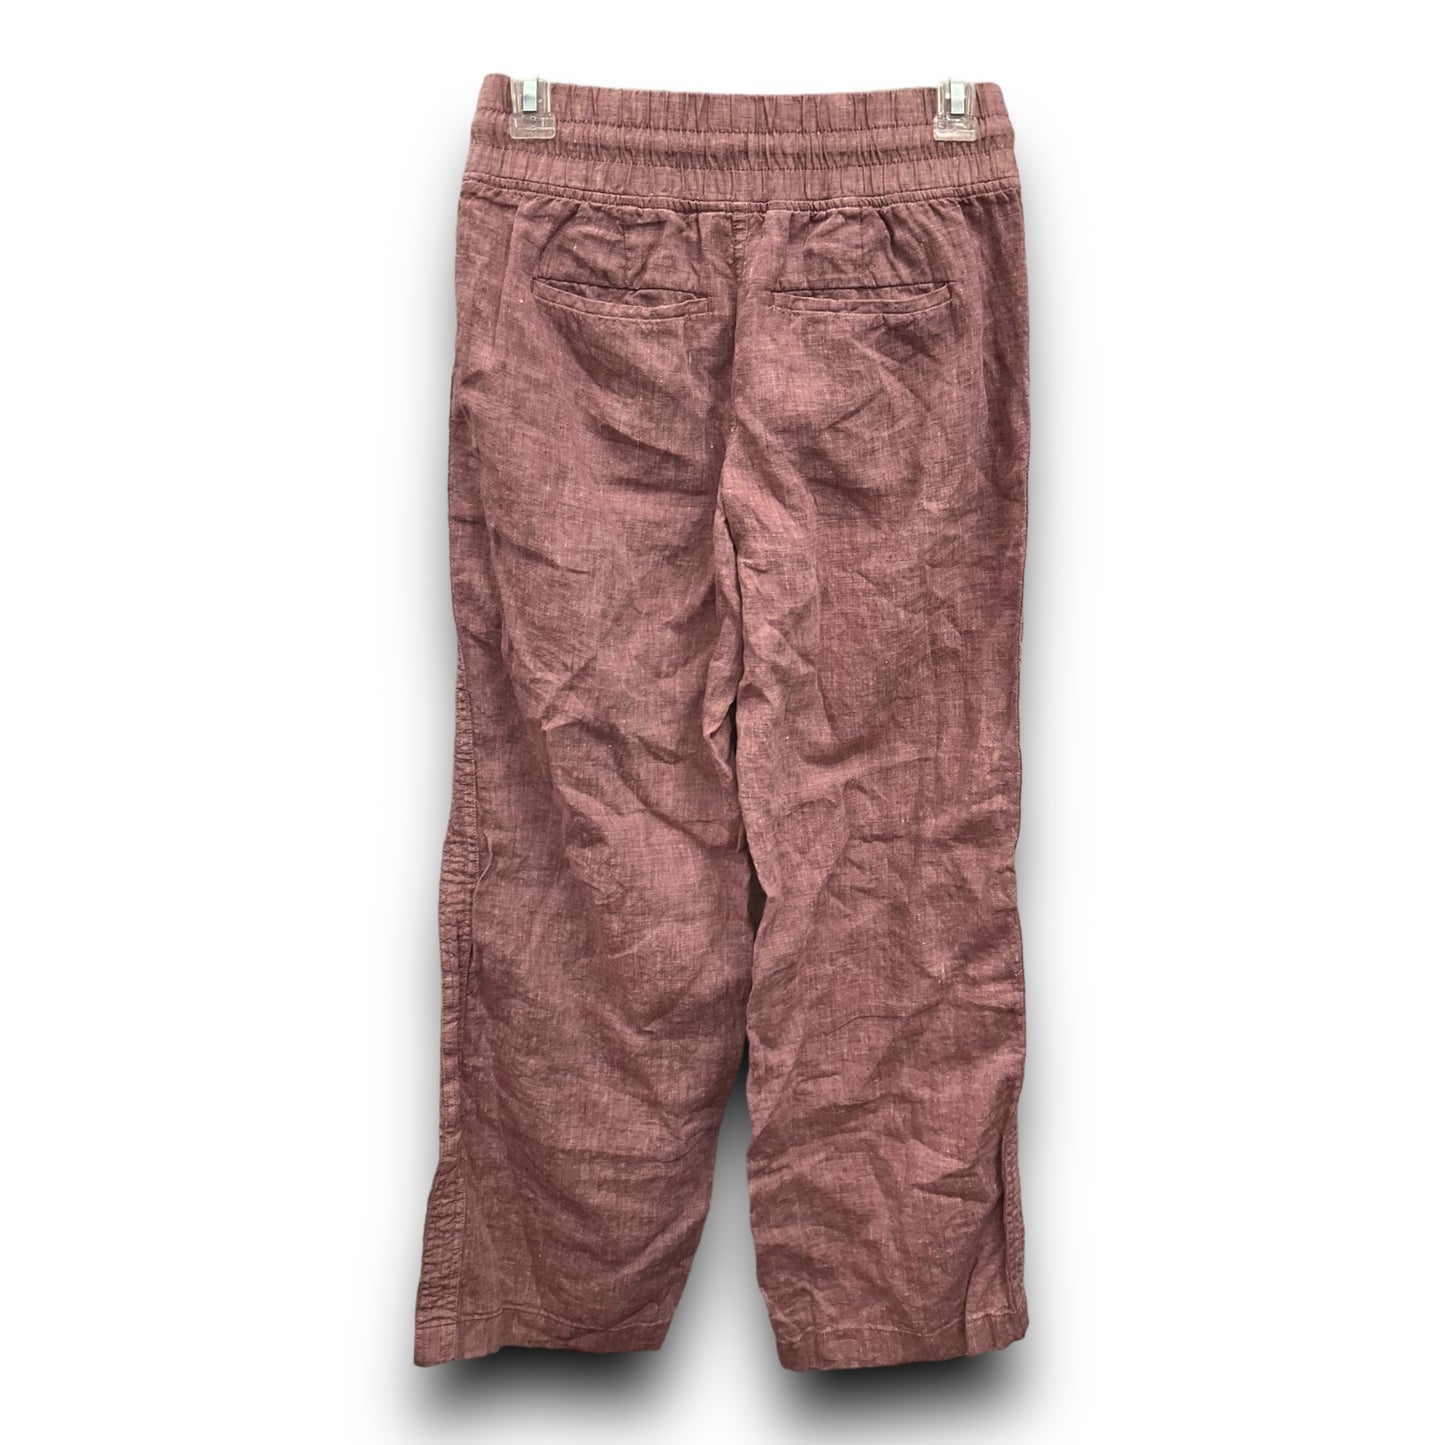 Pants Linen By Athleta  Size: 2petite